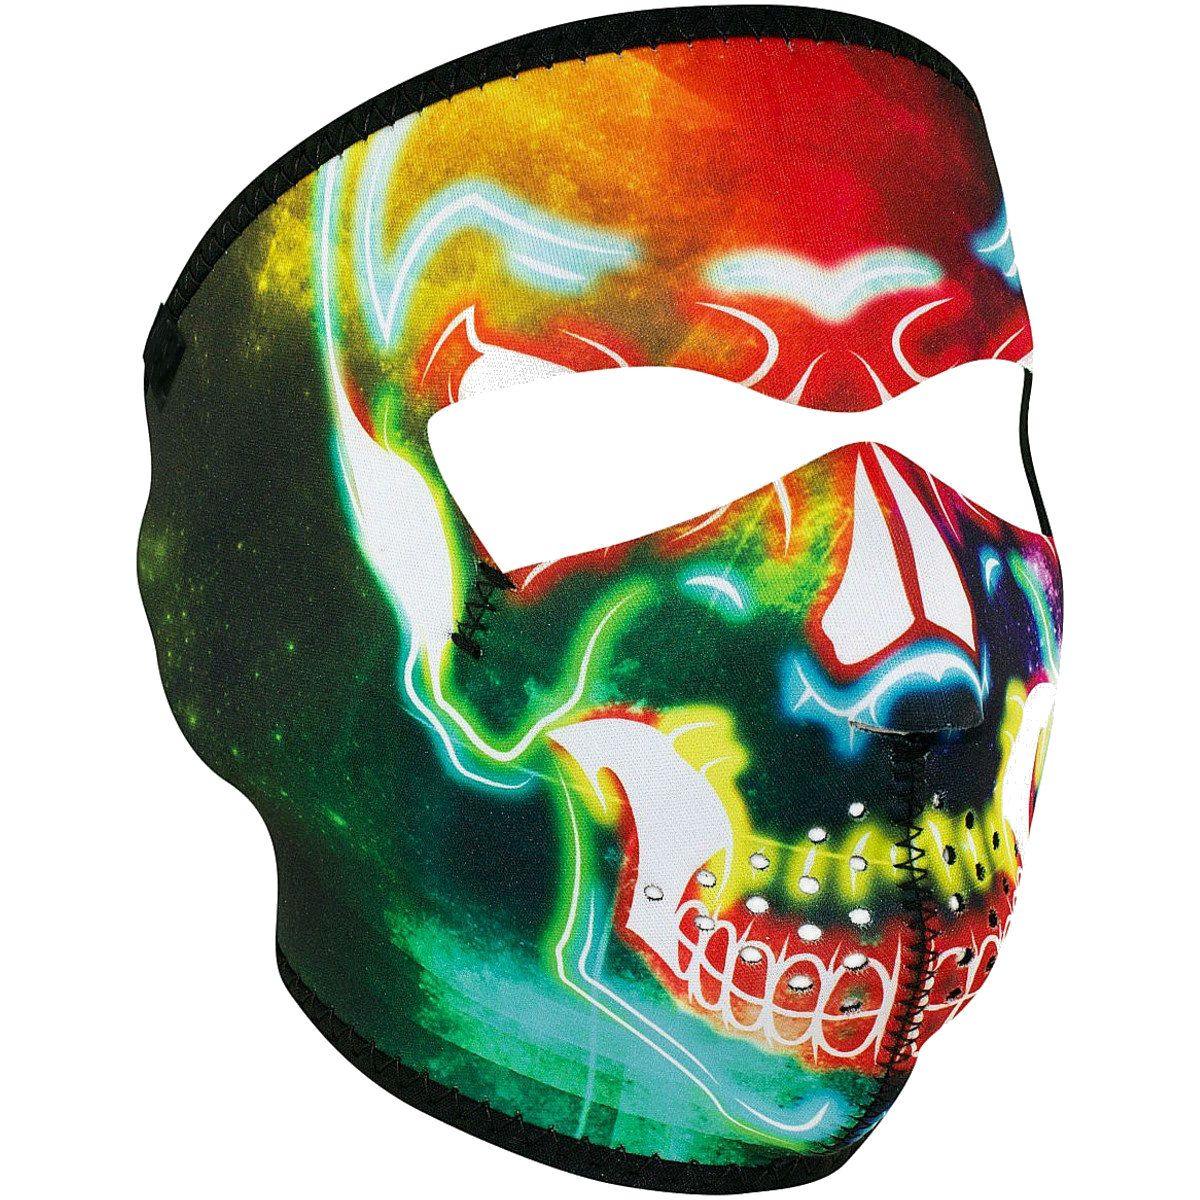 Zan headgear® Electric Skull Full Face Mask, Neoprene/Polyester, One Size - American Legend Rider